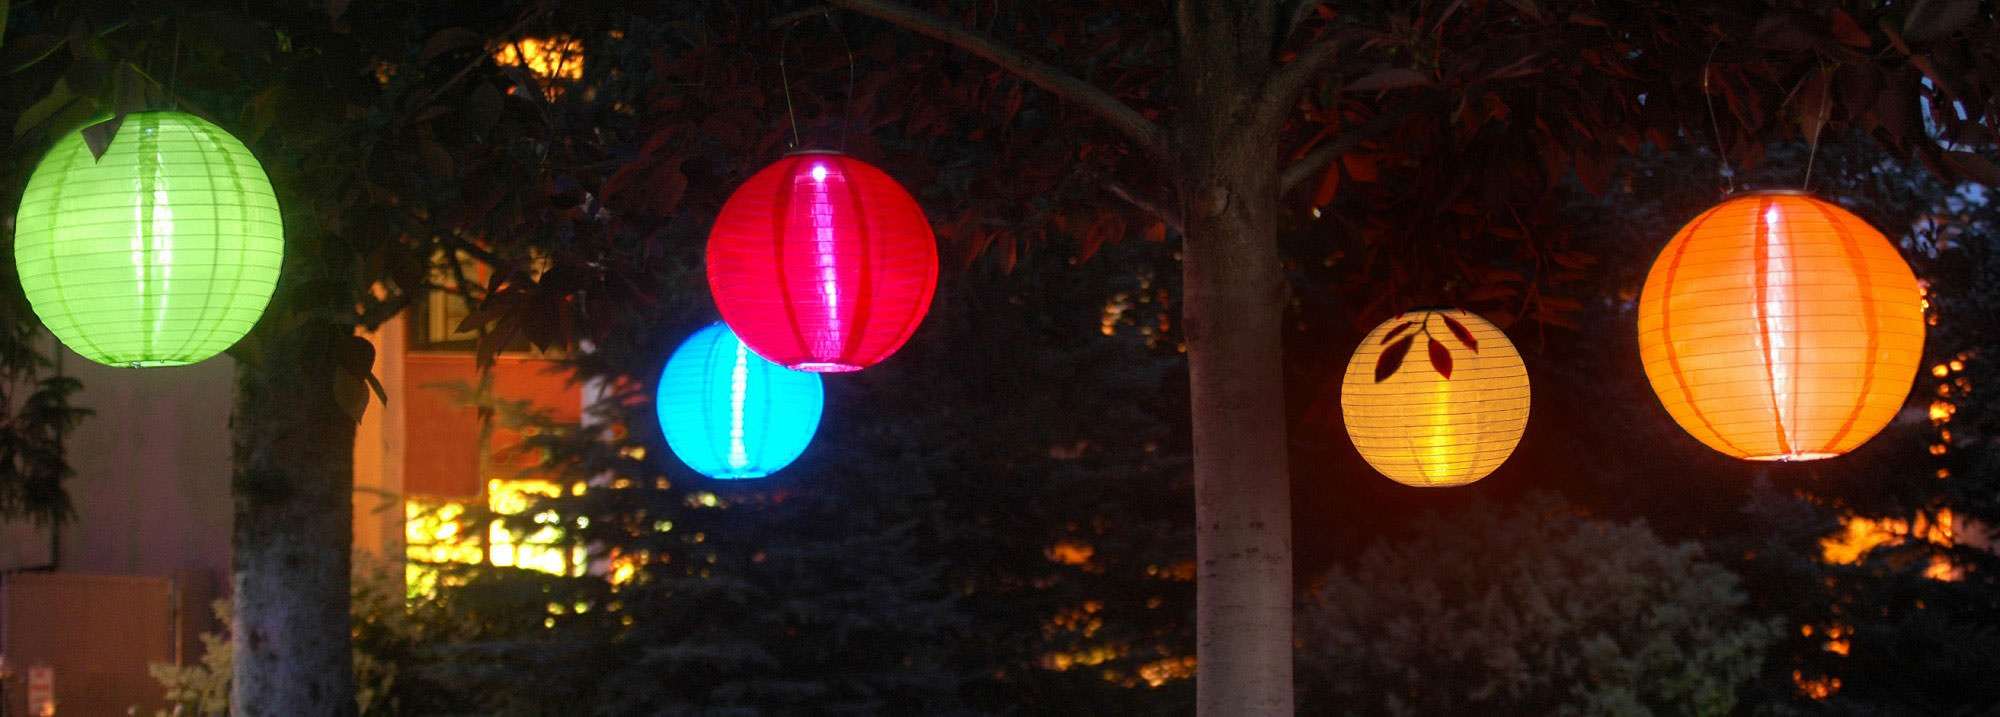 DFOhome Outdoor Lighting Buying Guide - Allsop Lanterns